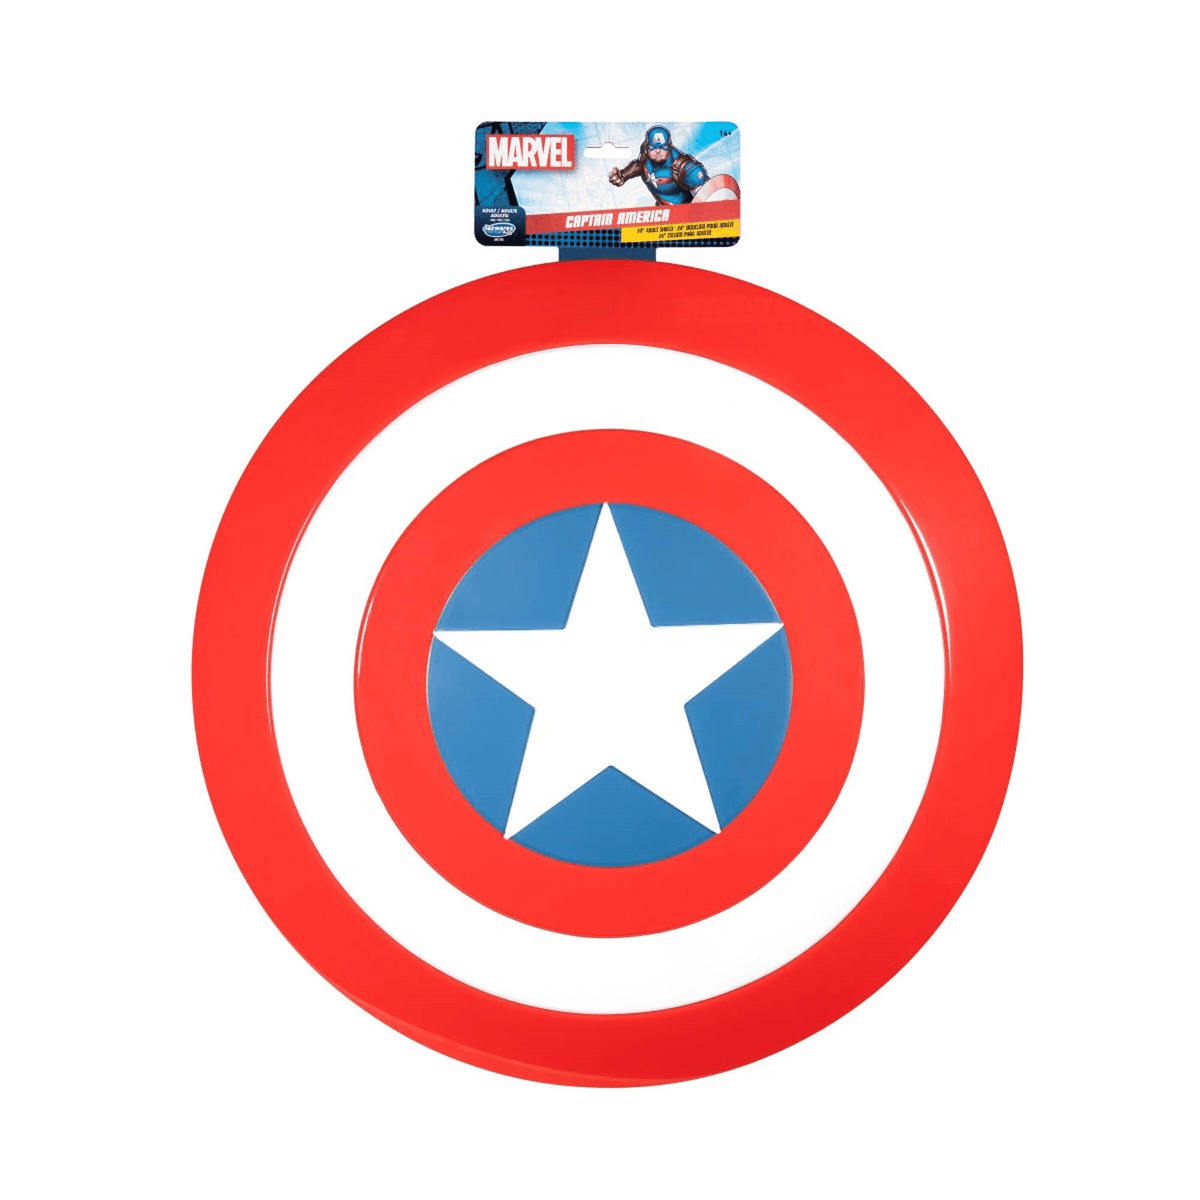 KROEGER Costume Accessories Captain America Shield for Kids 191726466079